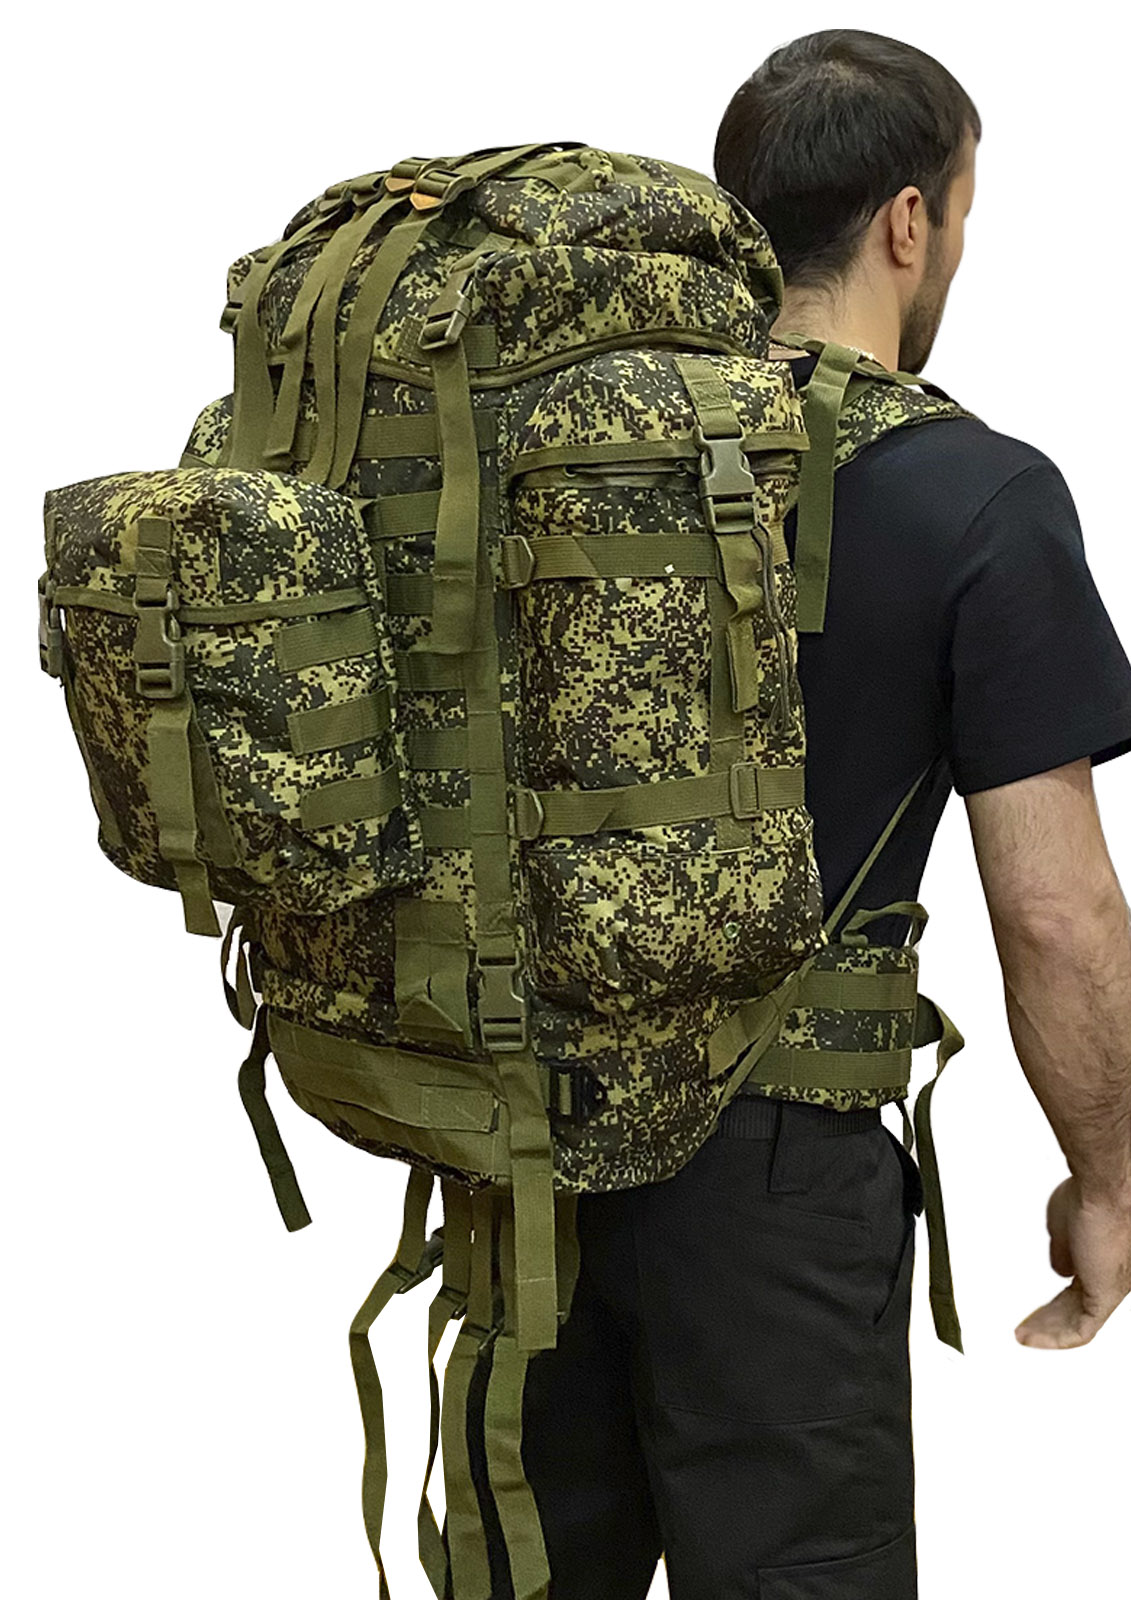  Армейский экспедиционный рюкзак (100 литров, цифра)